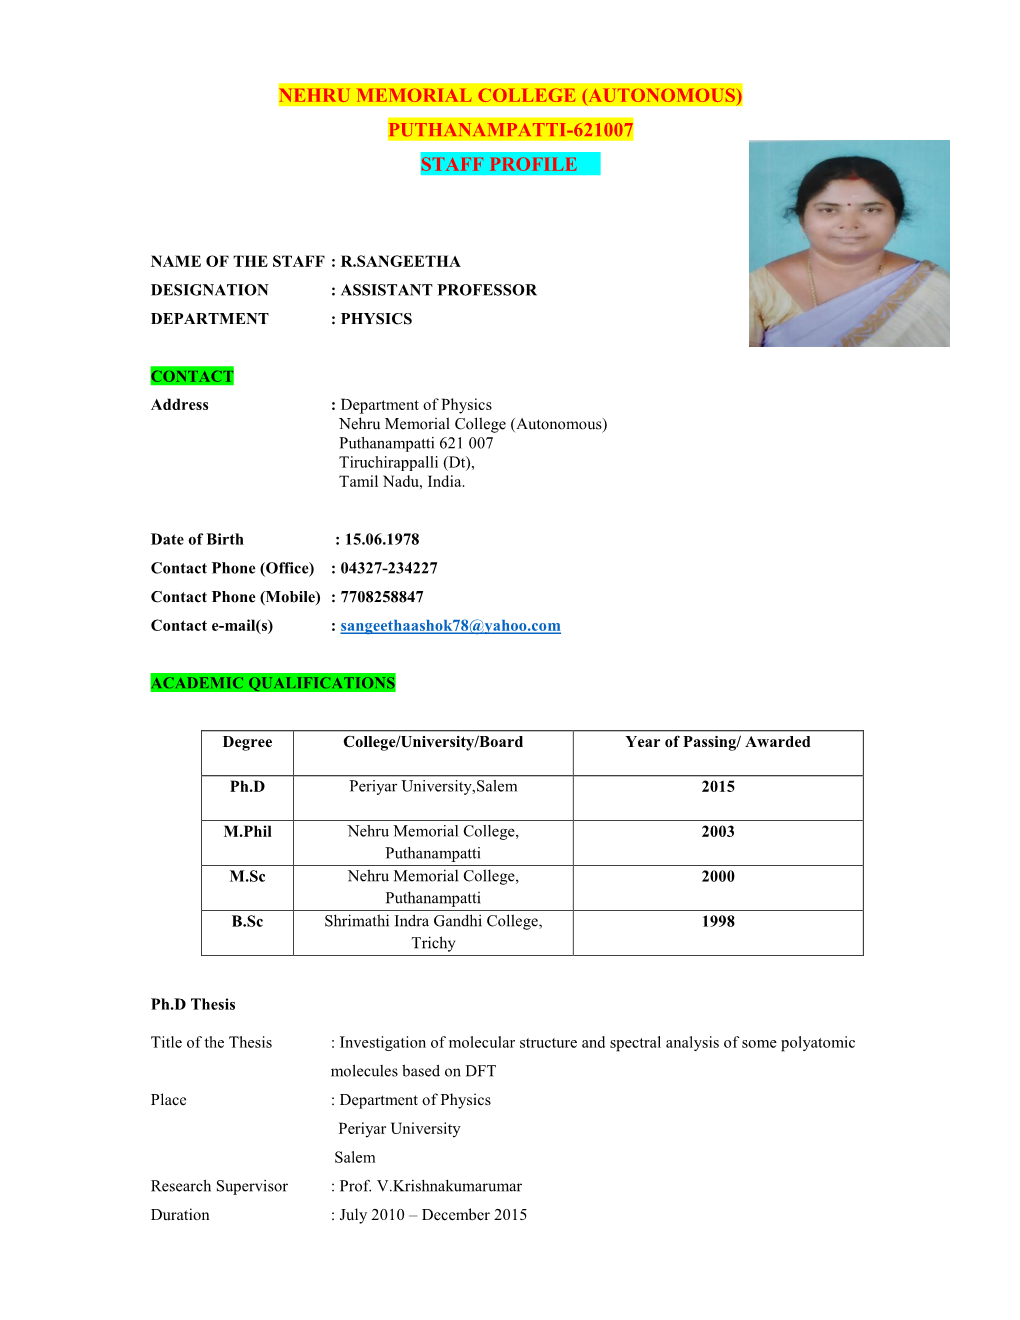 Nehru Memorial College (Autonomous) Puthanampatti-621007 Staff Profile